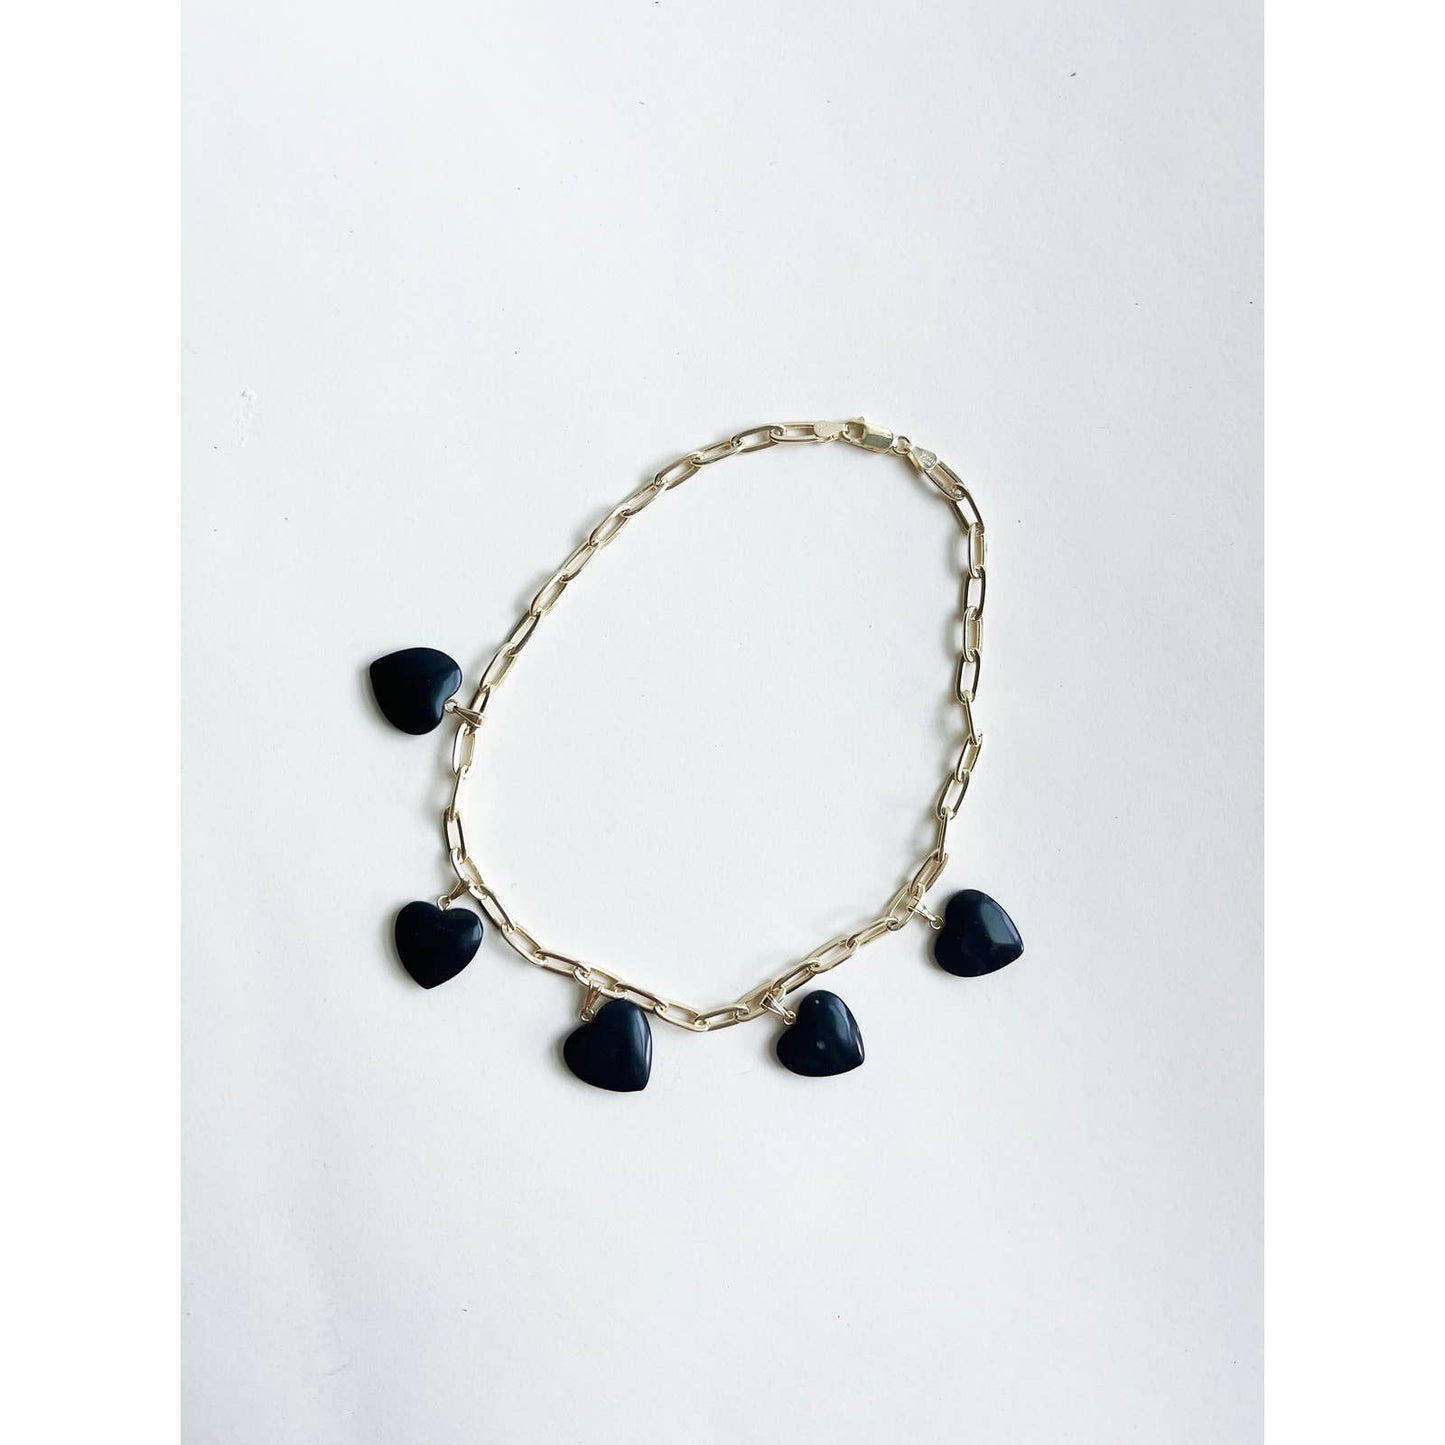 Handmade Heart Charm Necklace - Black Onyx Stones